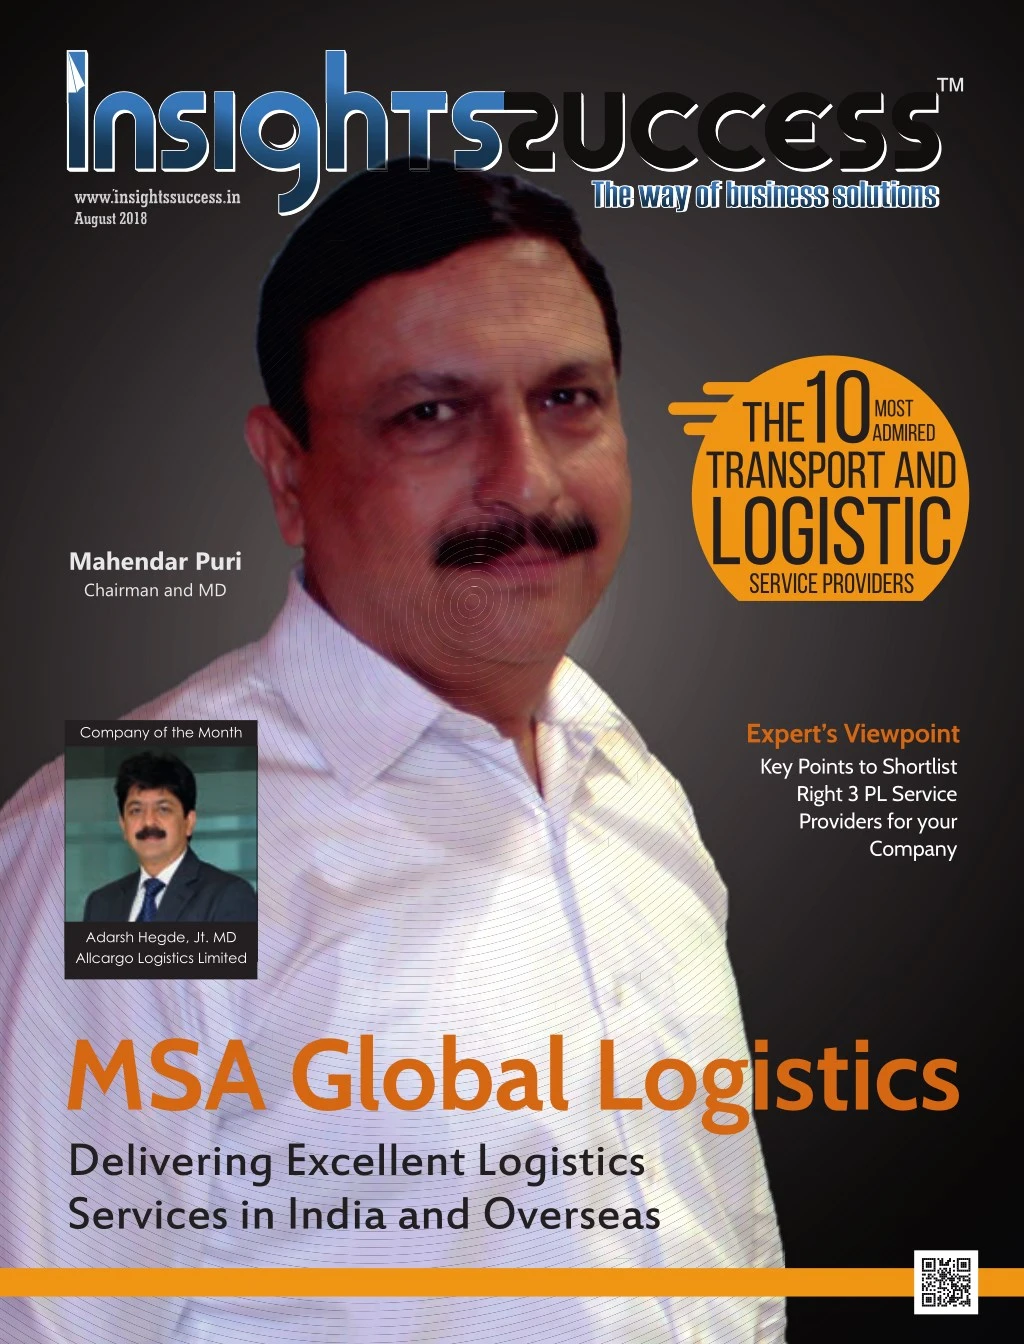 TM International Logistics - Promoters